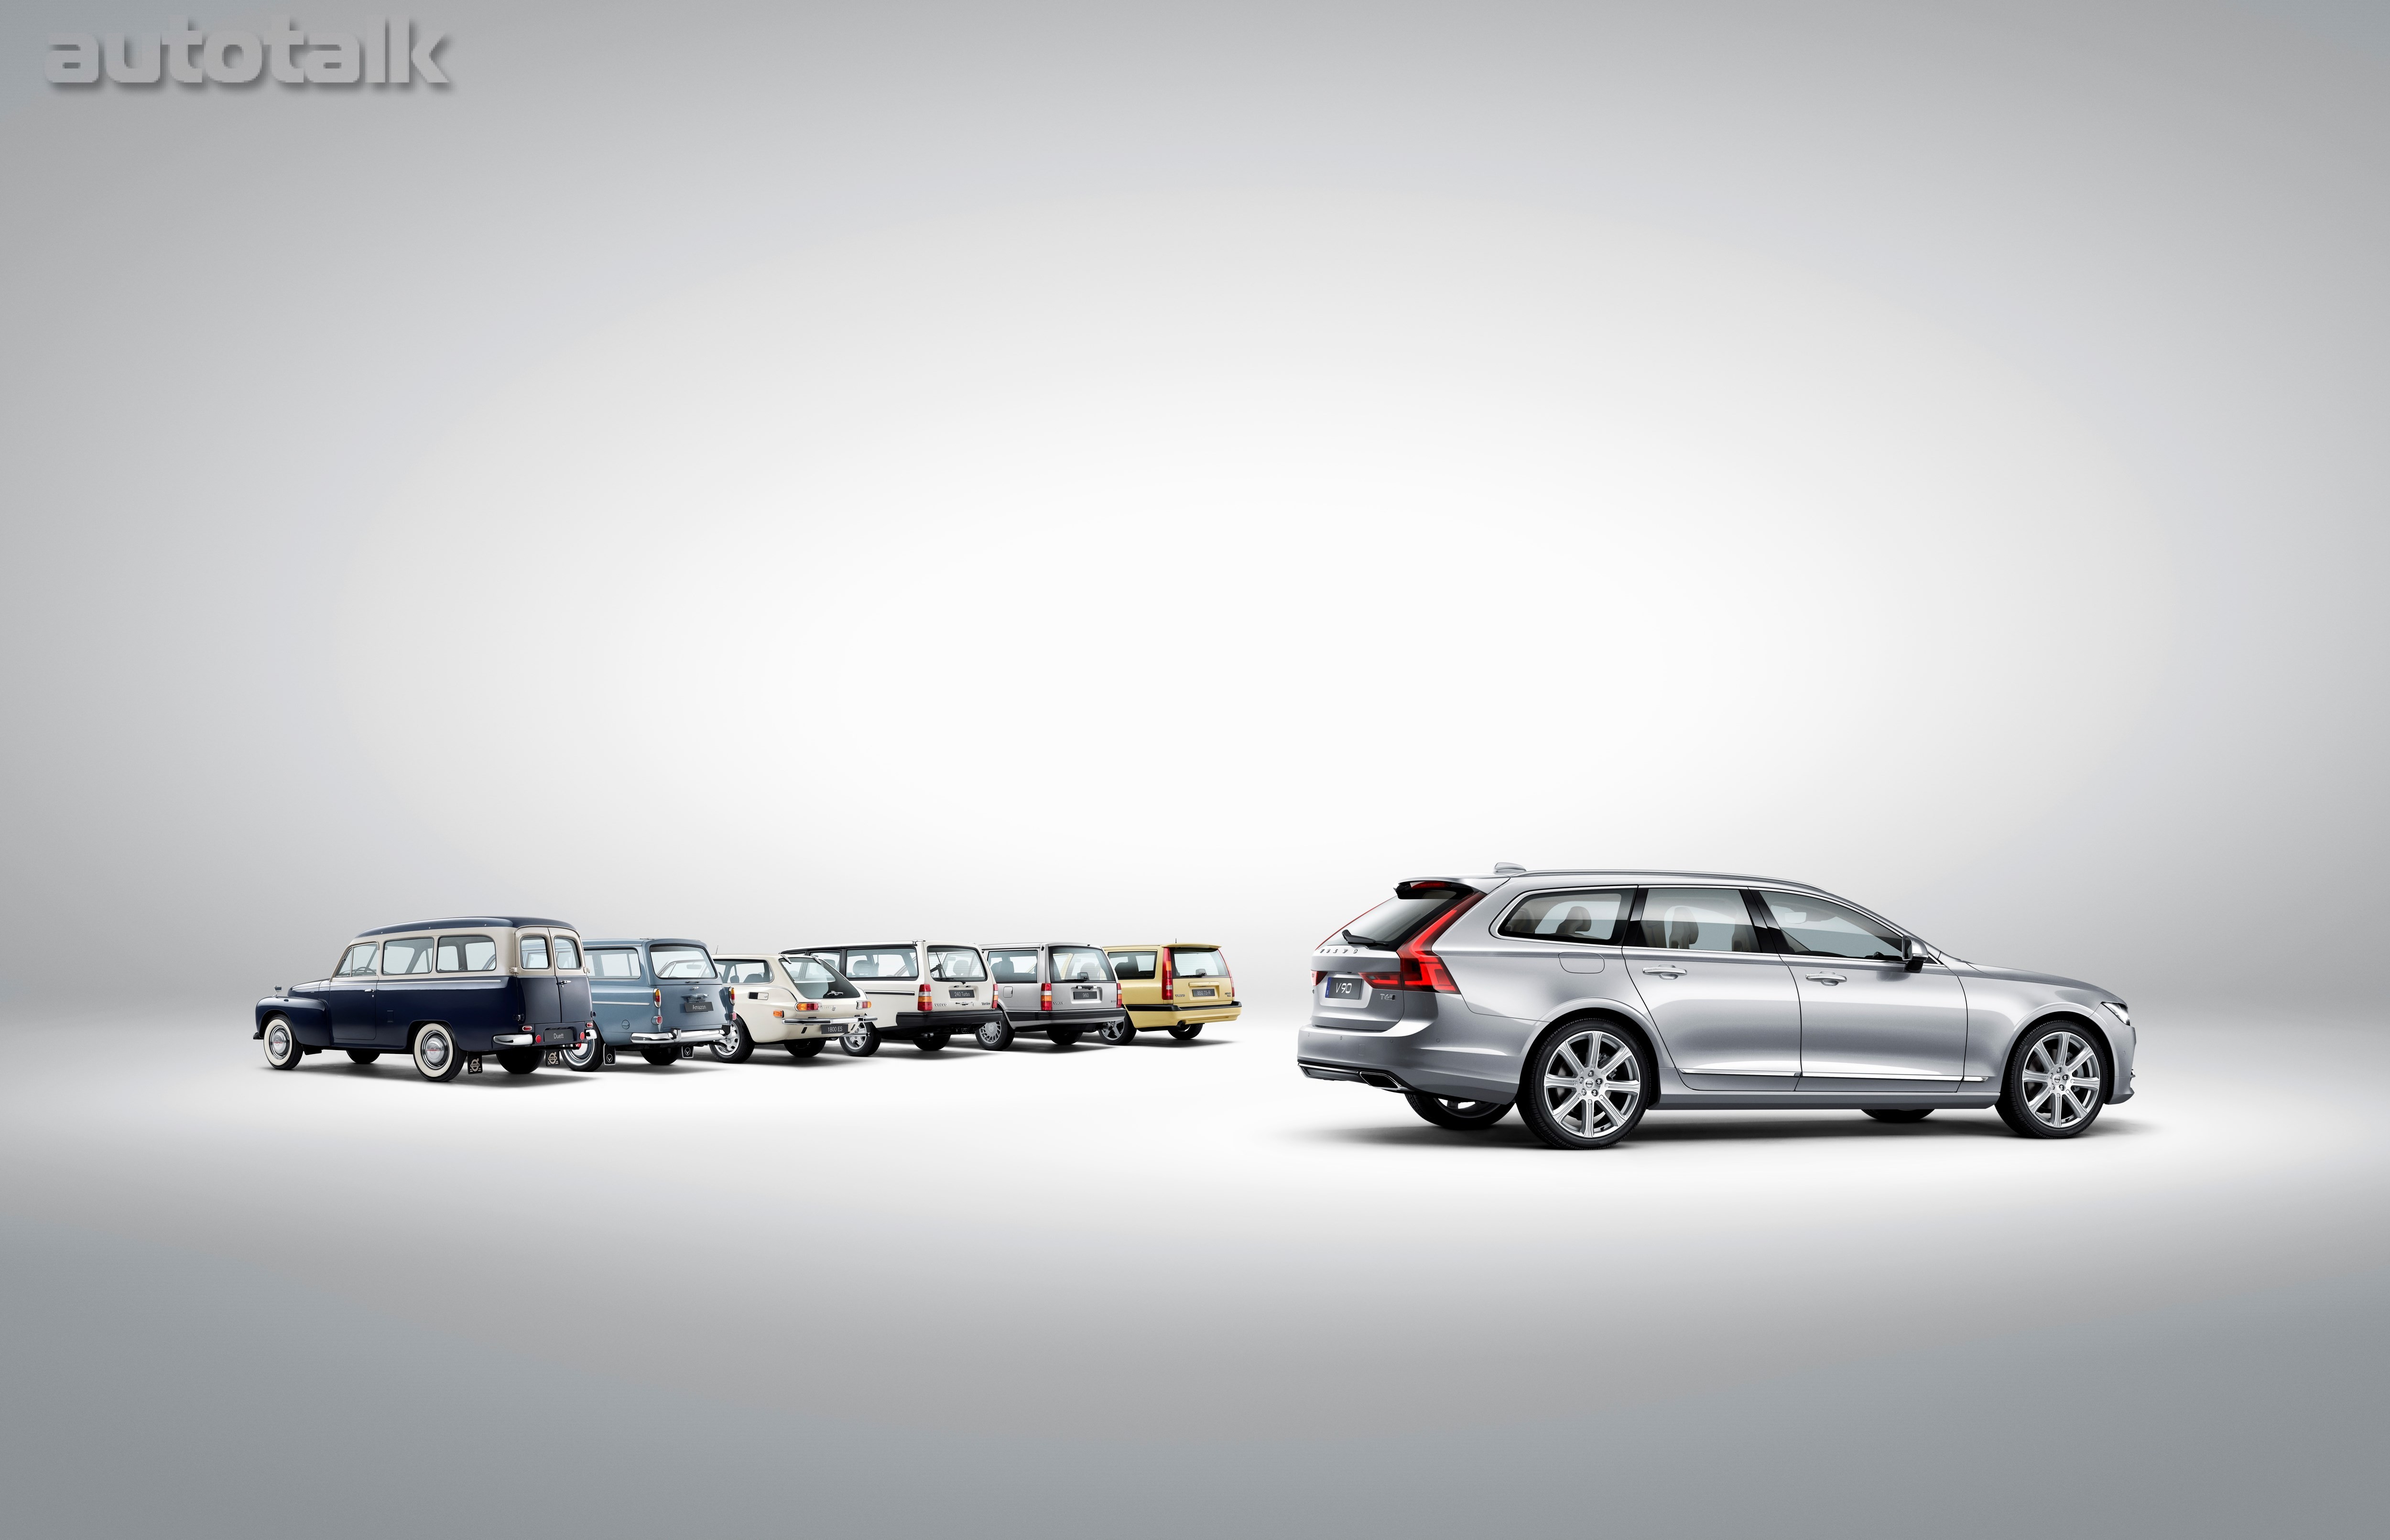 2017 Volvo V90 and a historical line-up of Volvo estate models